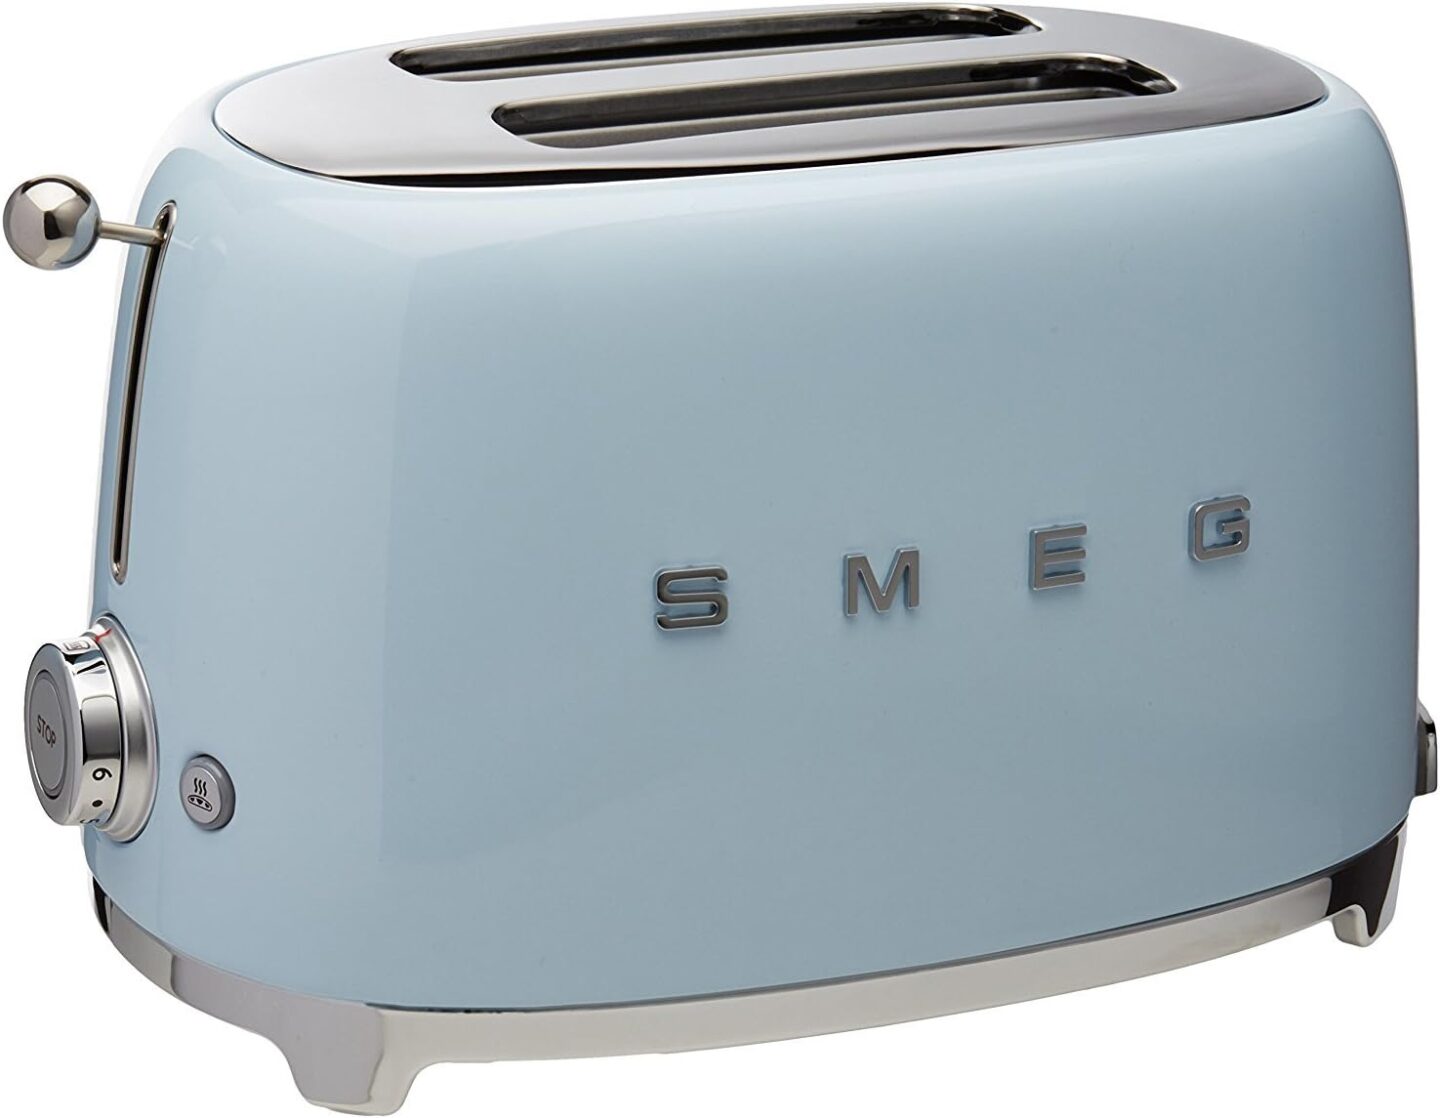 smeg toaster in baby blug